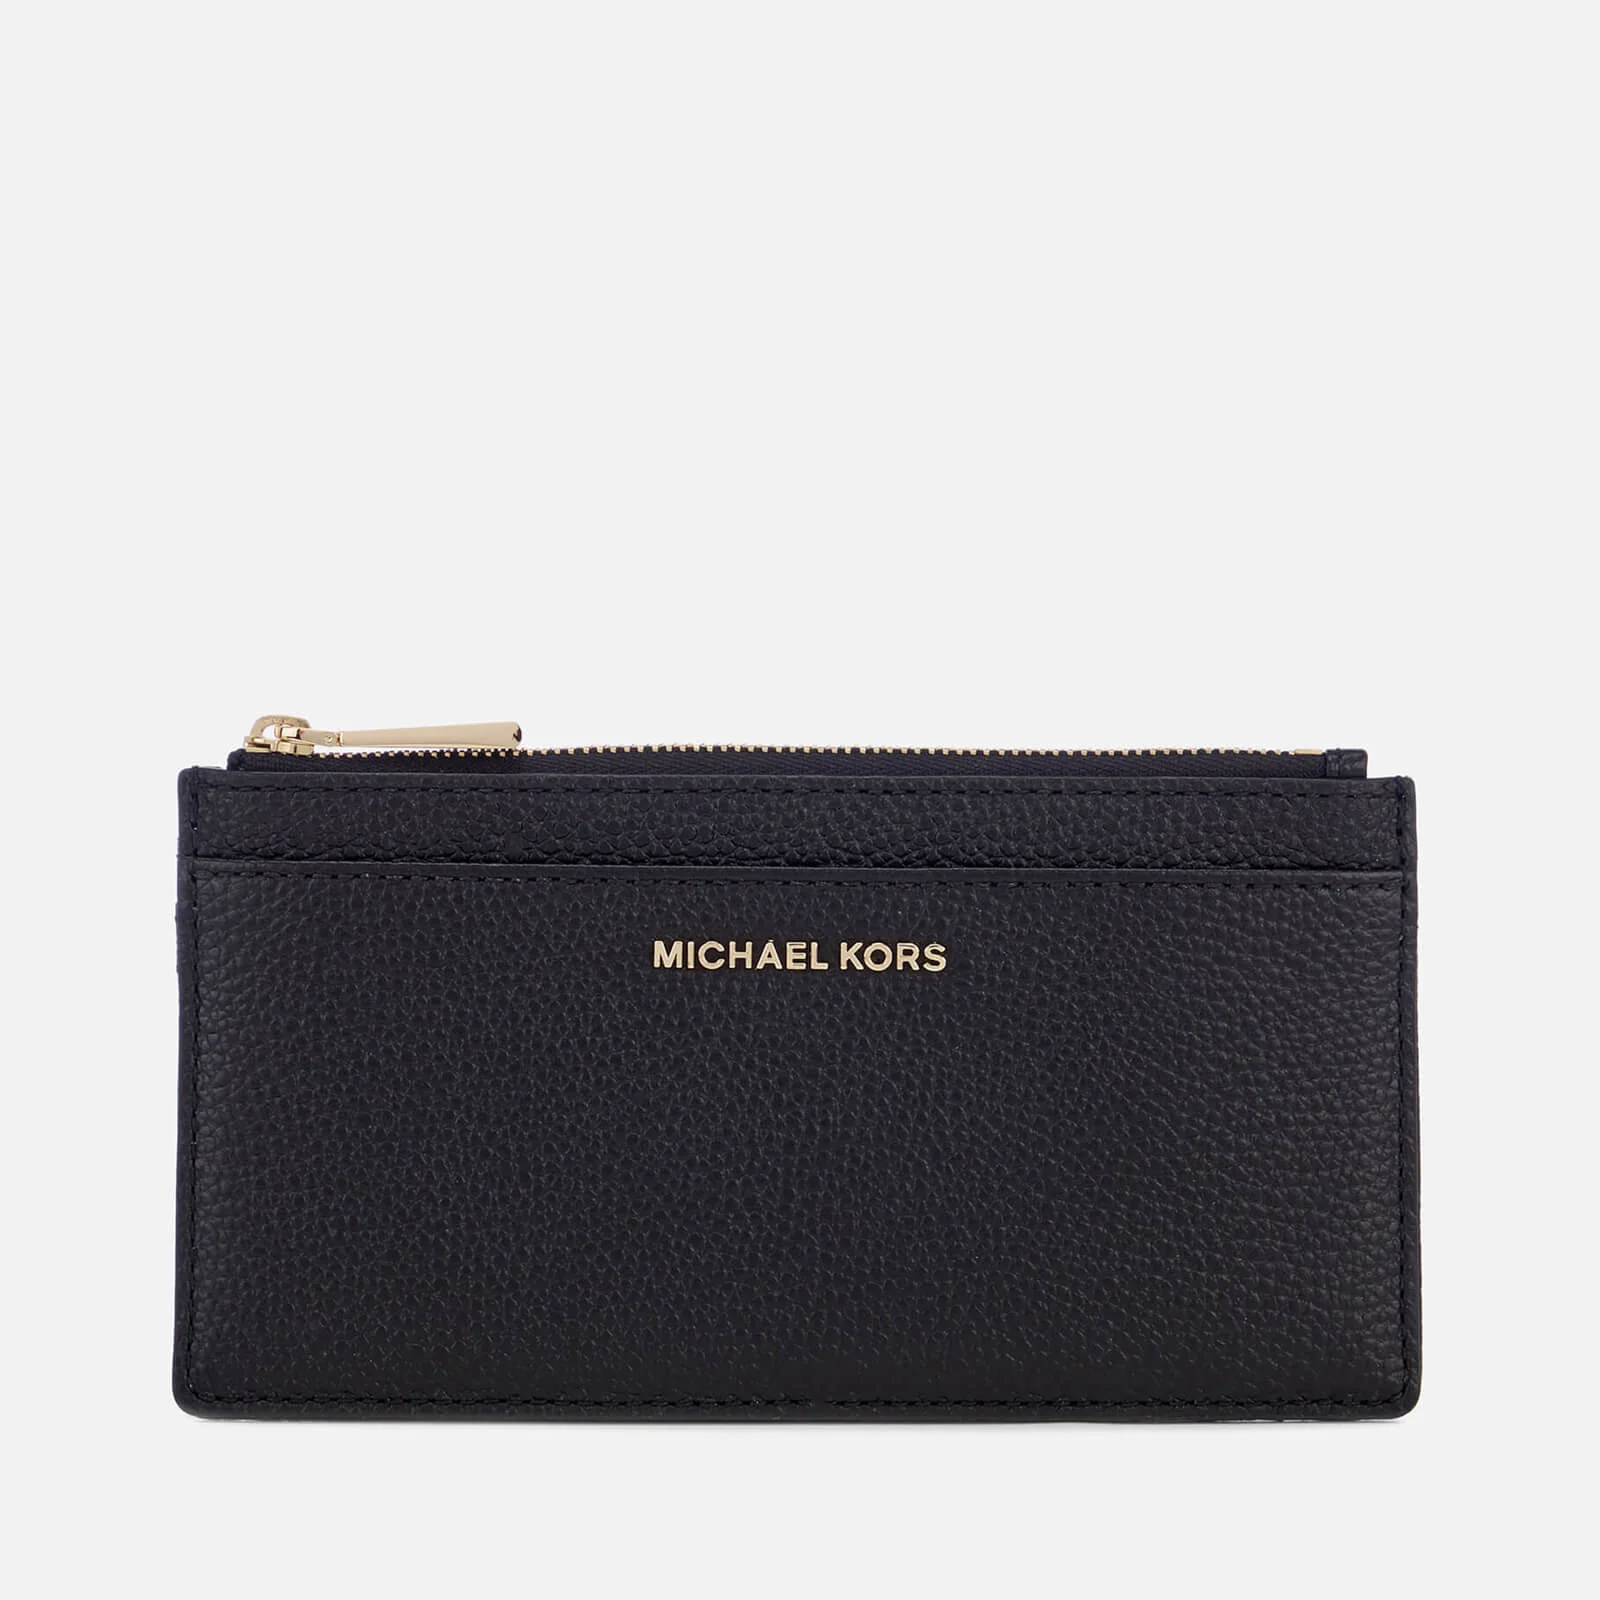 MICHAEL MICHAEL KORS Women's Mercer Pebble Large Slim Card Case - Black Image 1